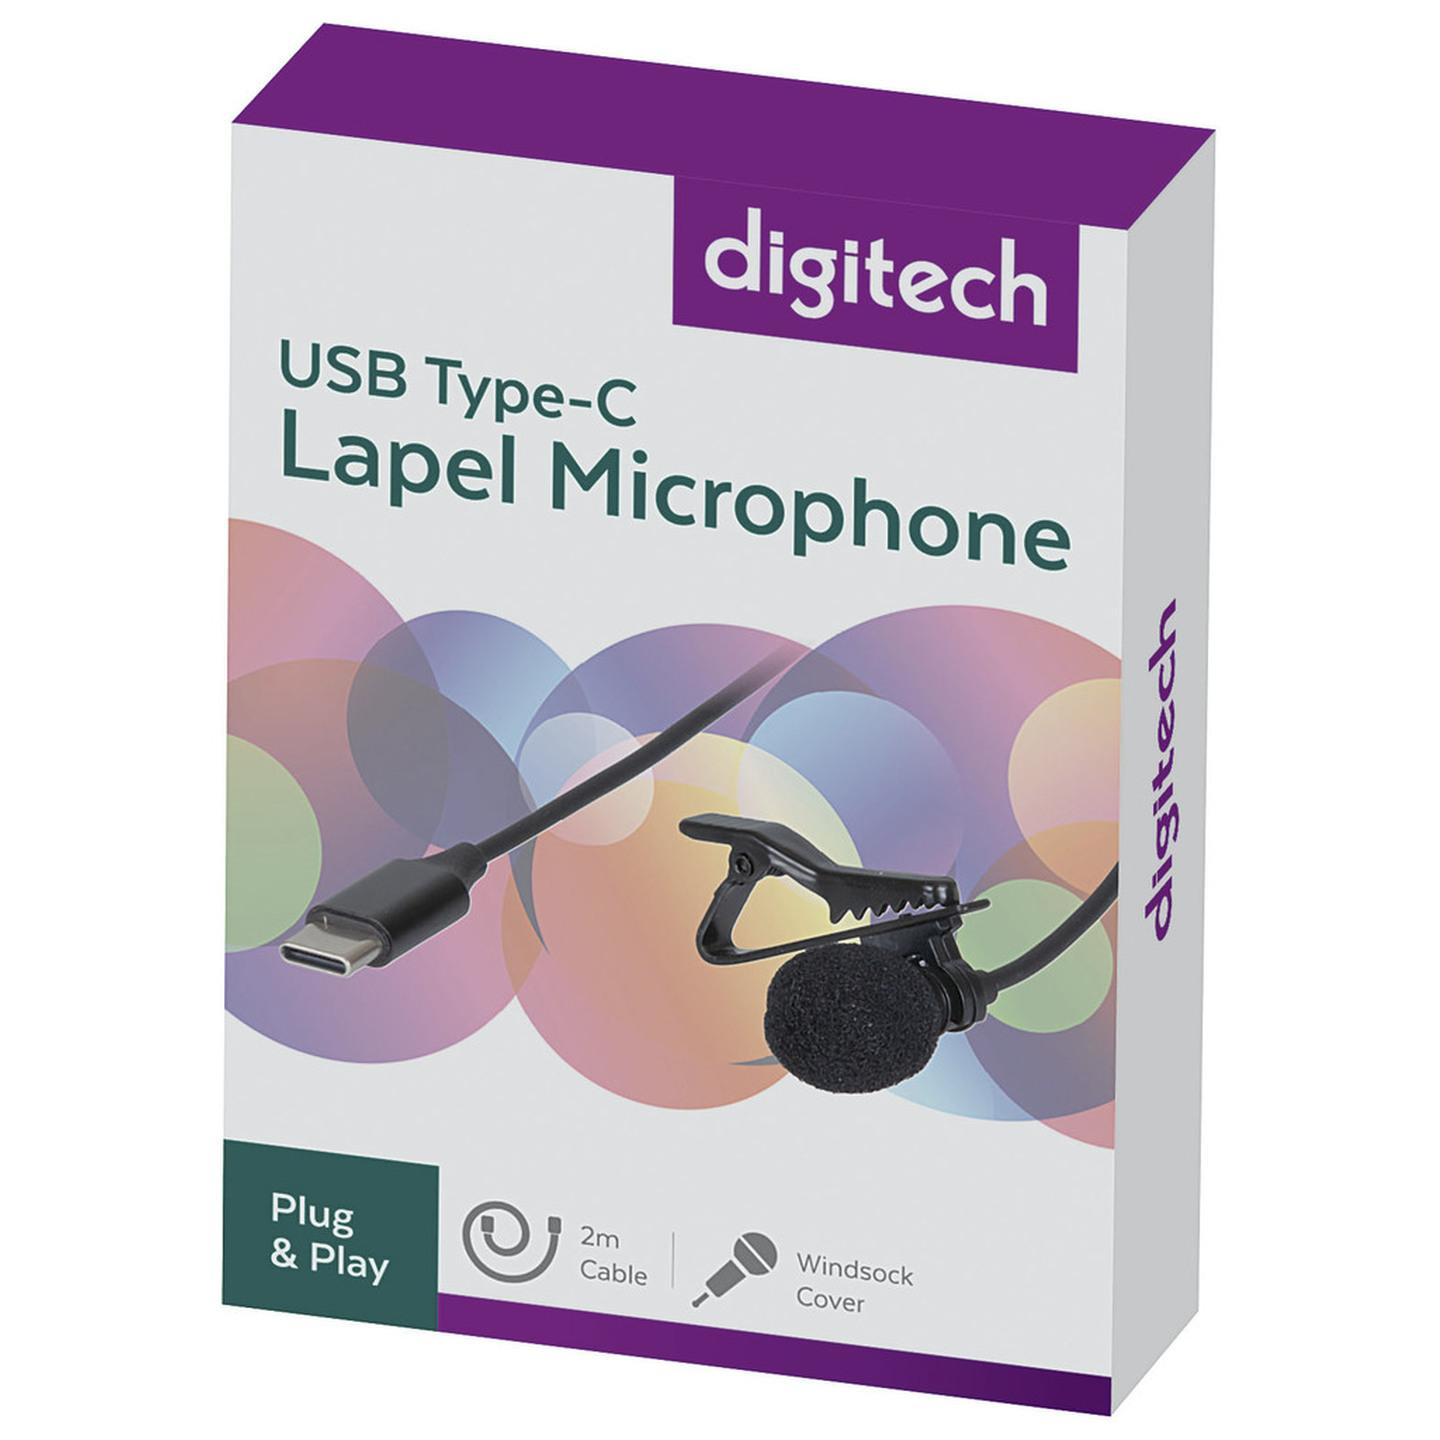 USB Type-C Lapel Microphone